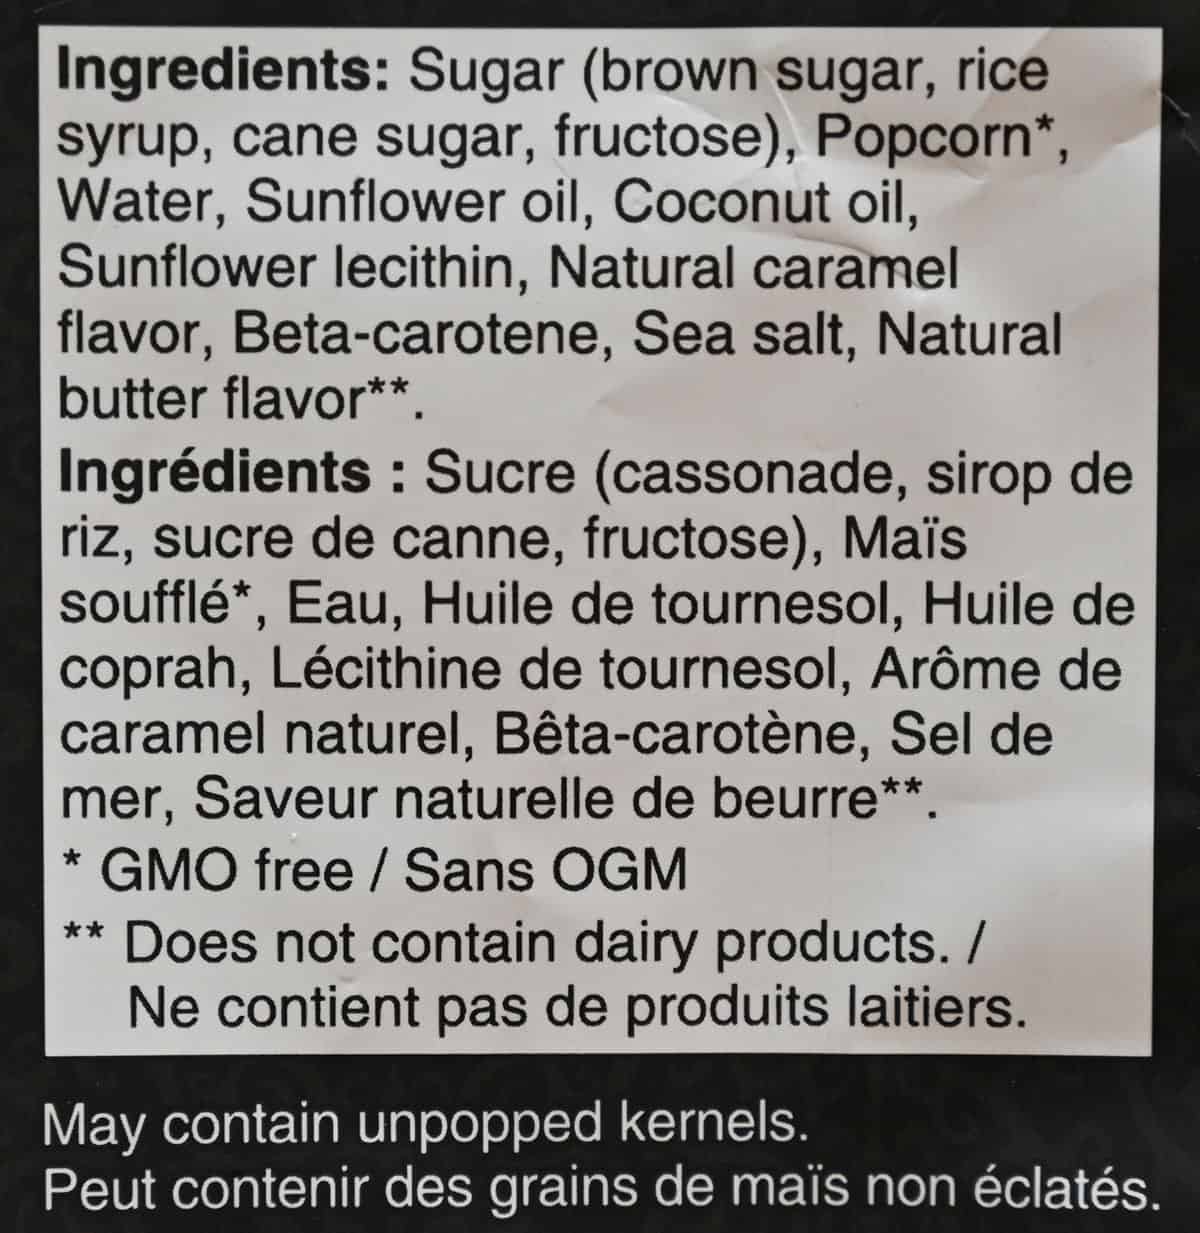 Image of salted caramel popcorn ingredients list from bag.